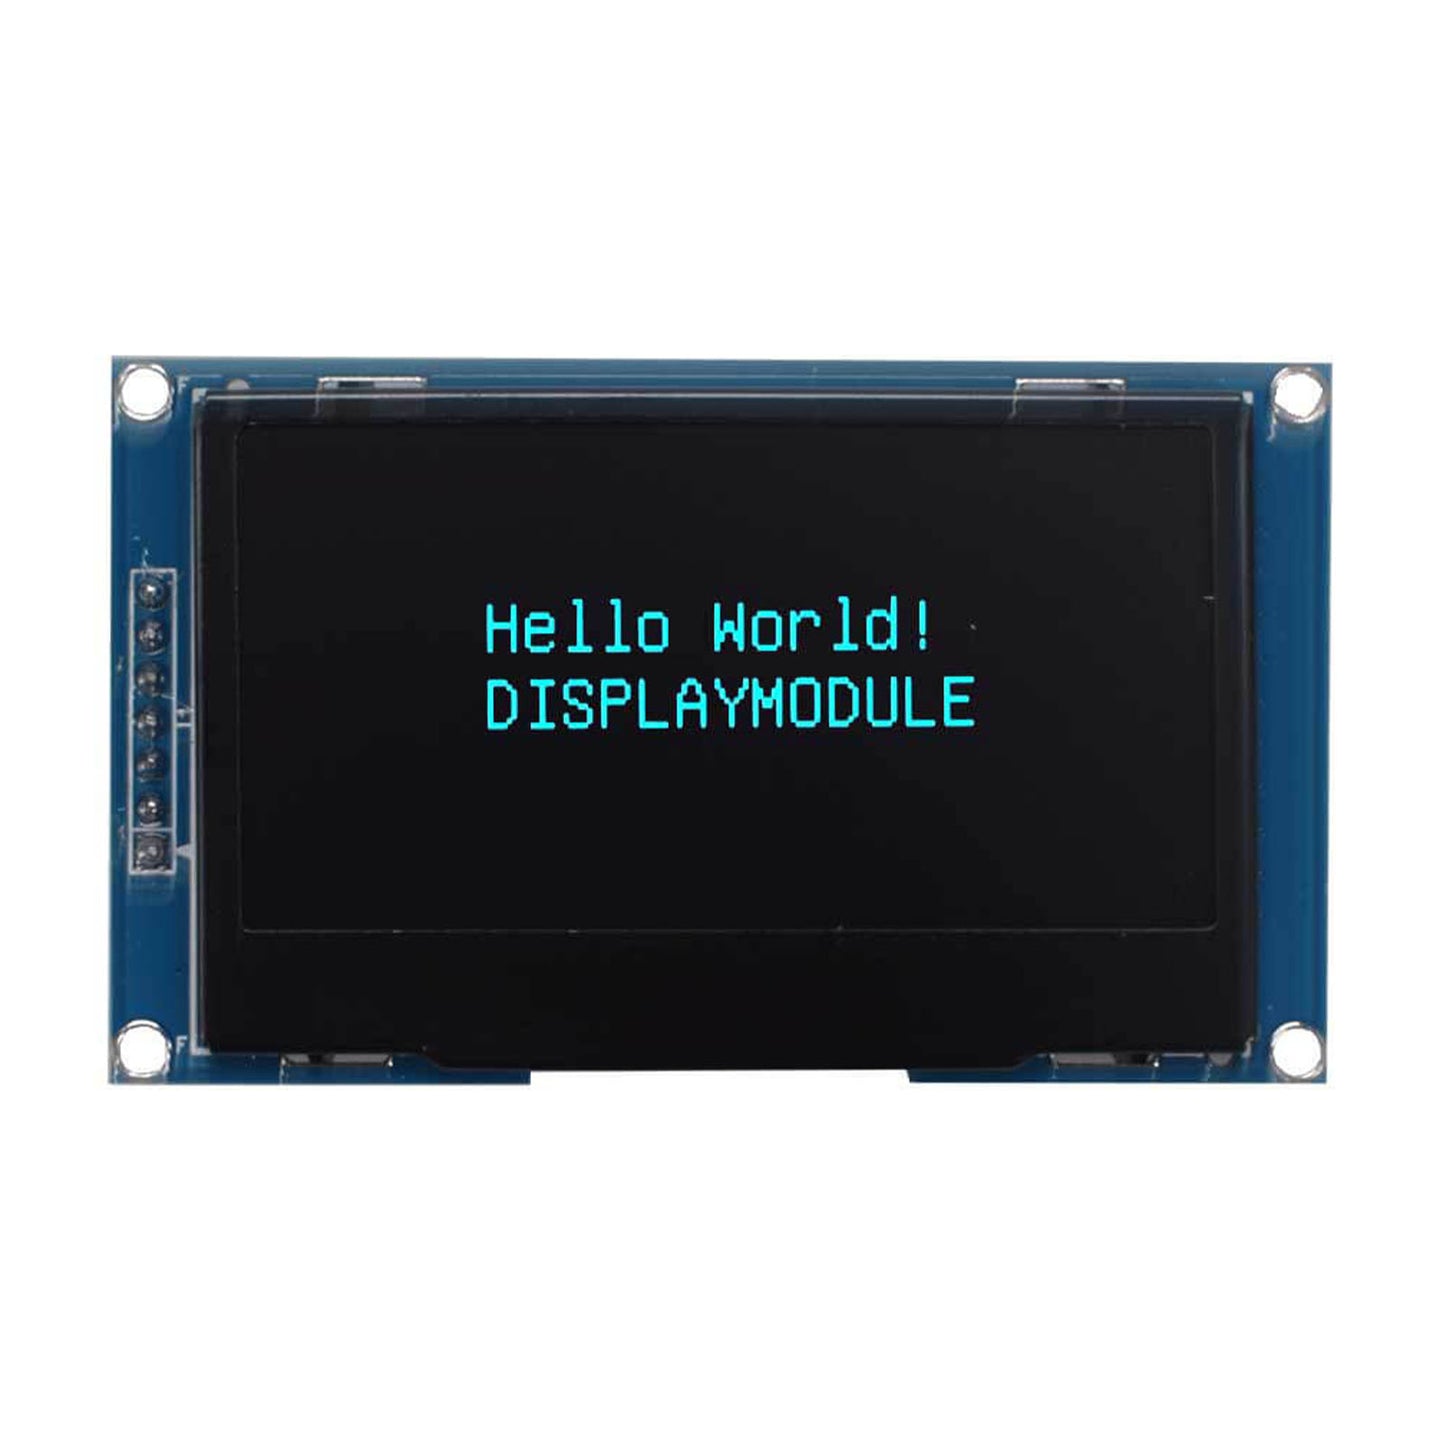 DisplayModule 2.42" 128x64 Monochrome OLED Display Module-SPI